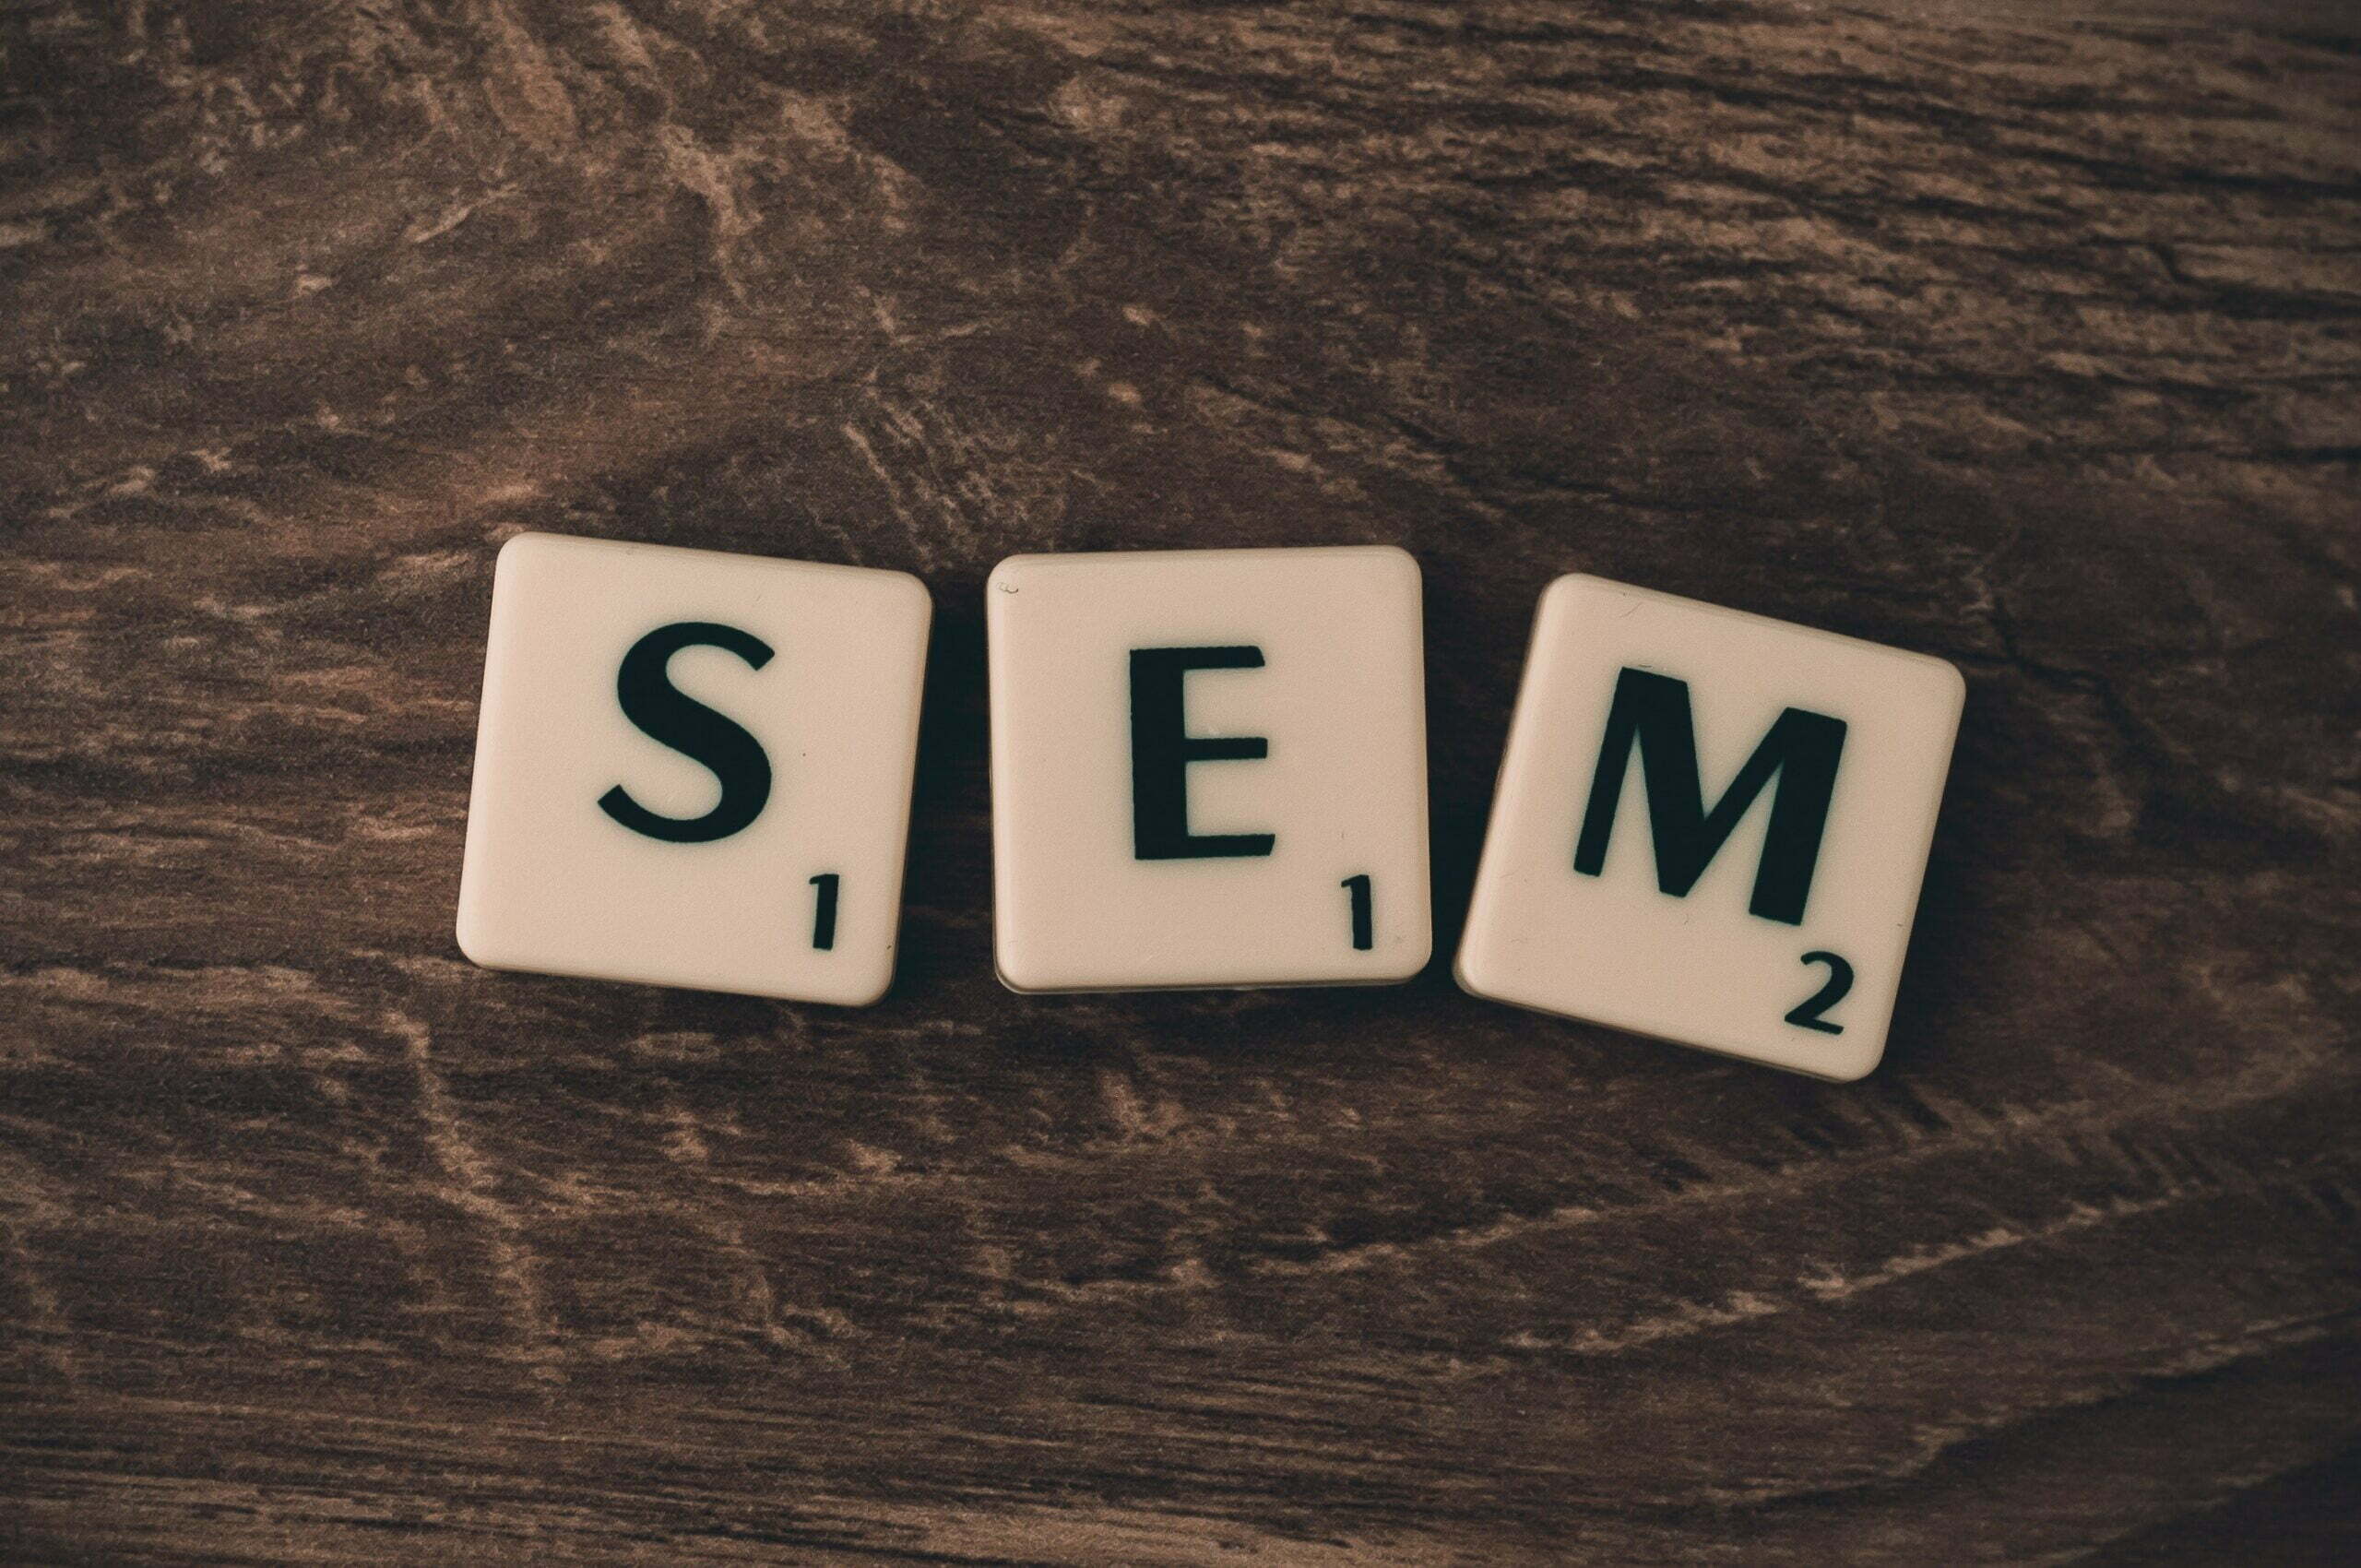 SEM = Search Engine Marketing